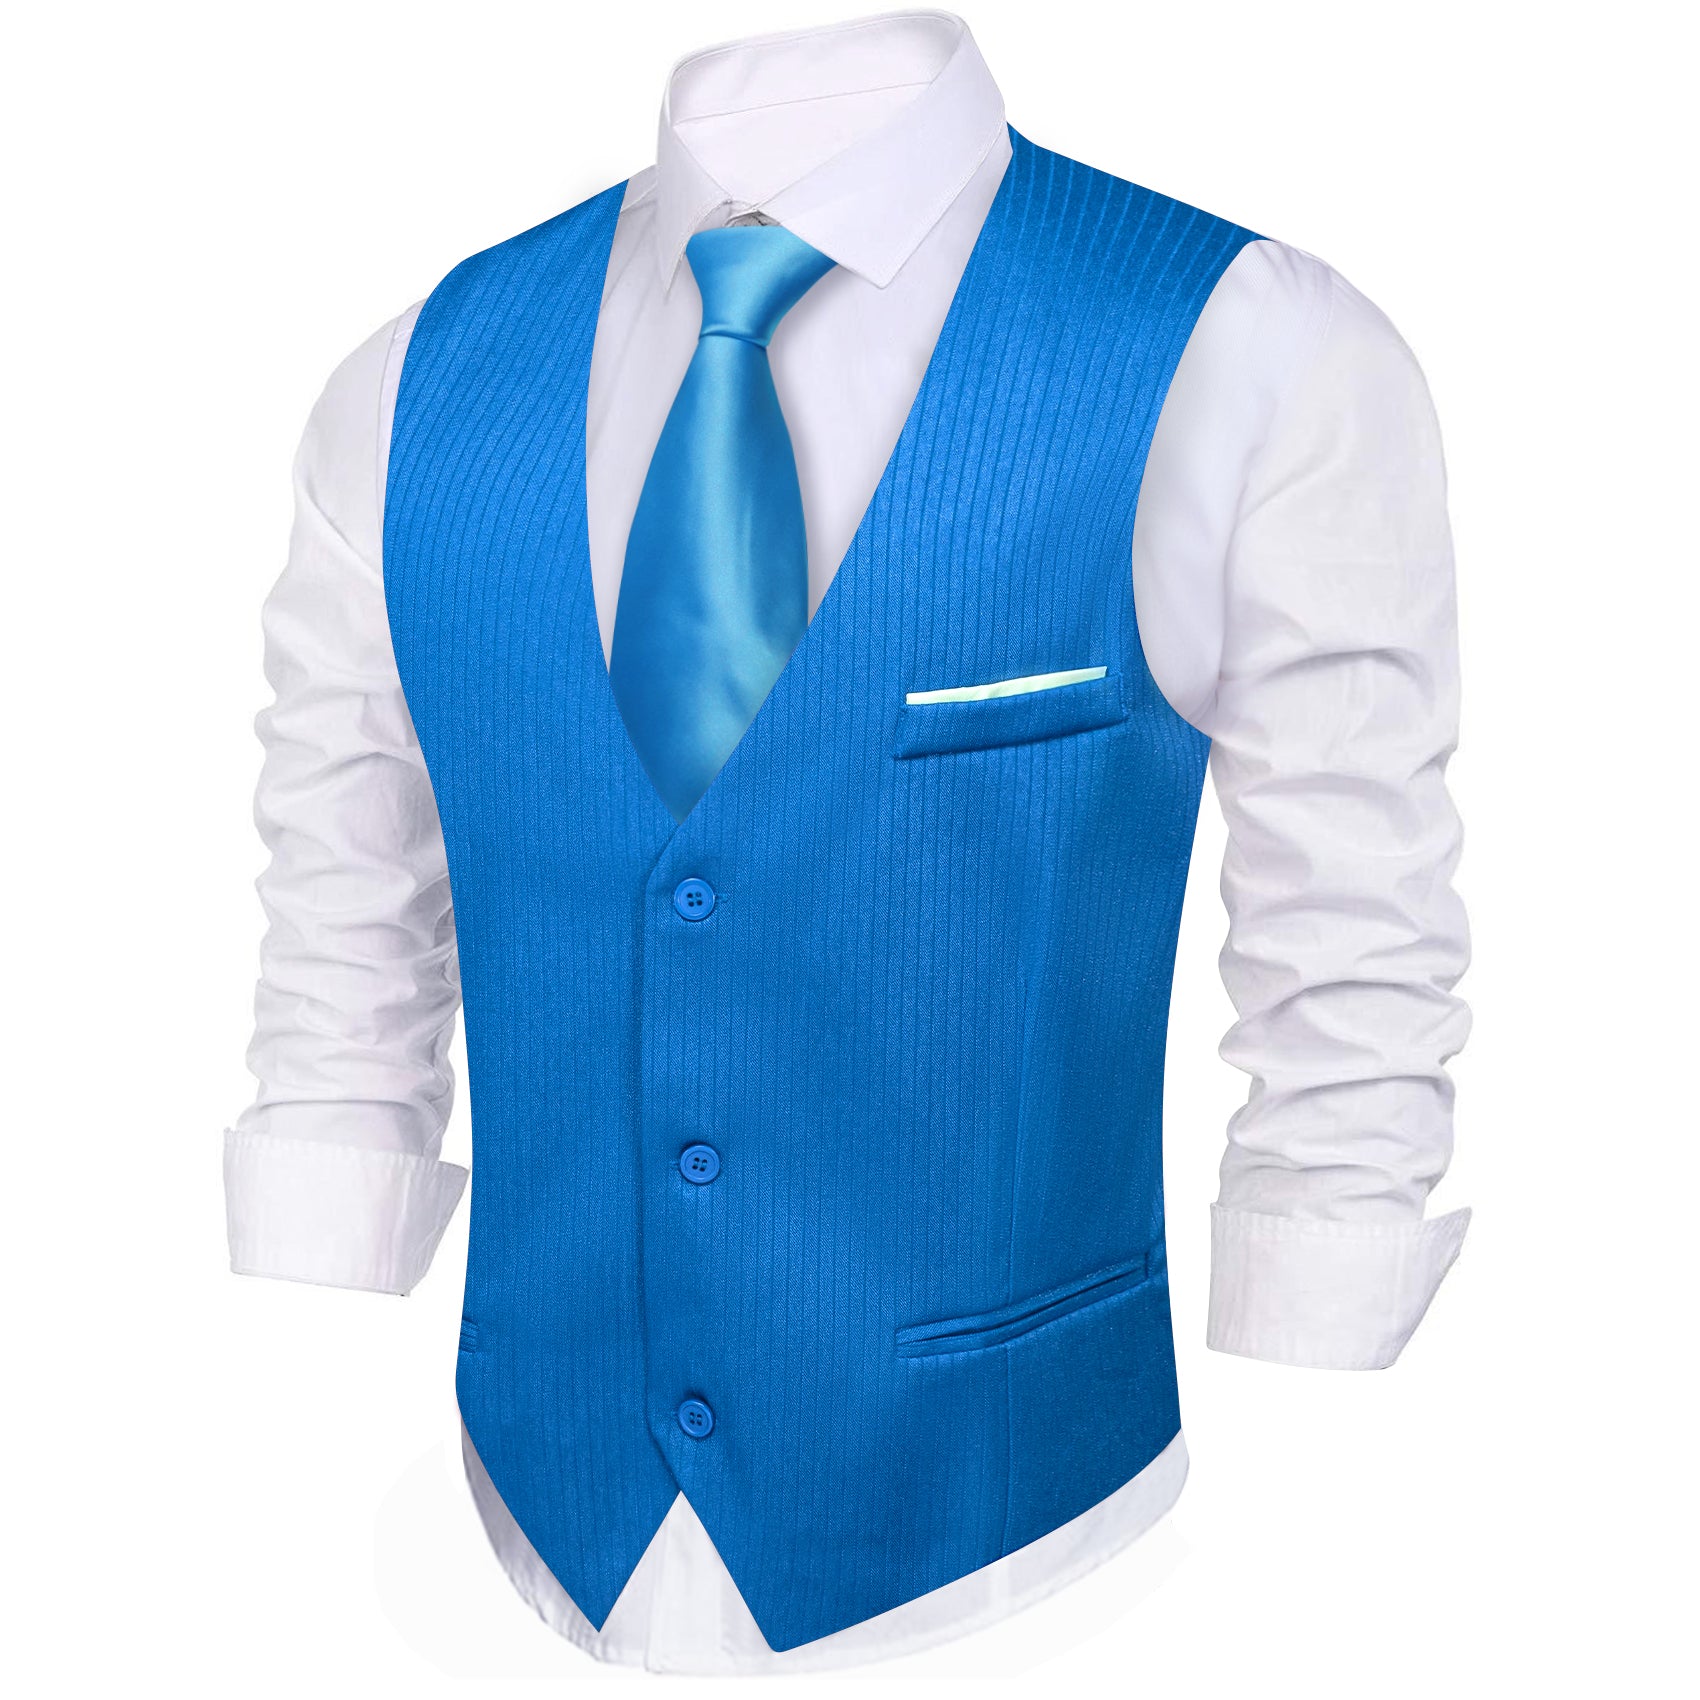 Barry.wang Bright Blue Solid Business Vest Suit